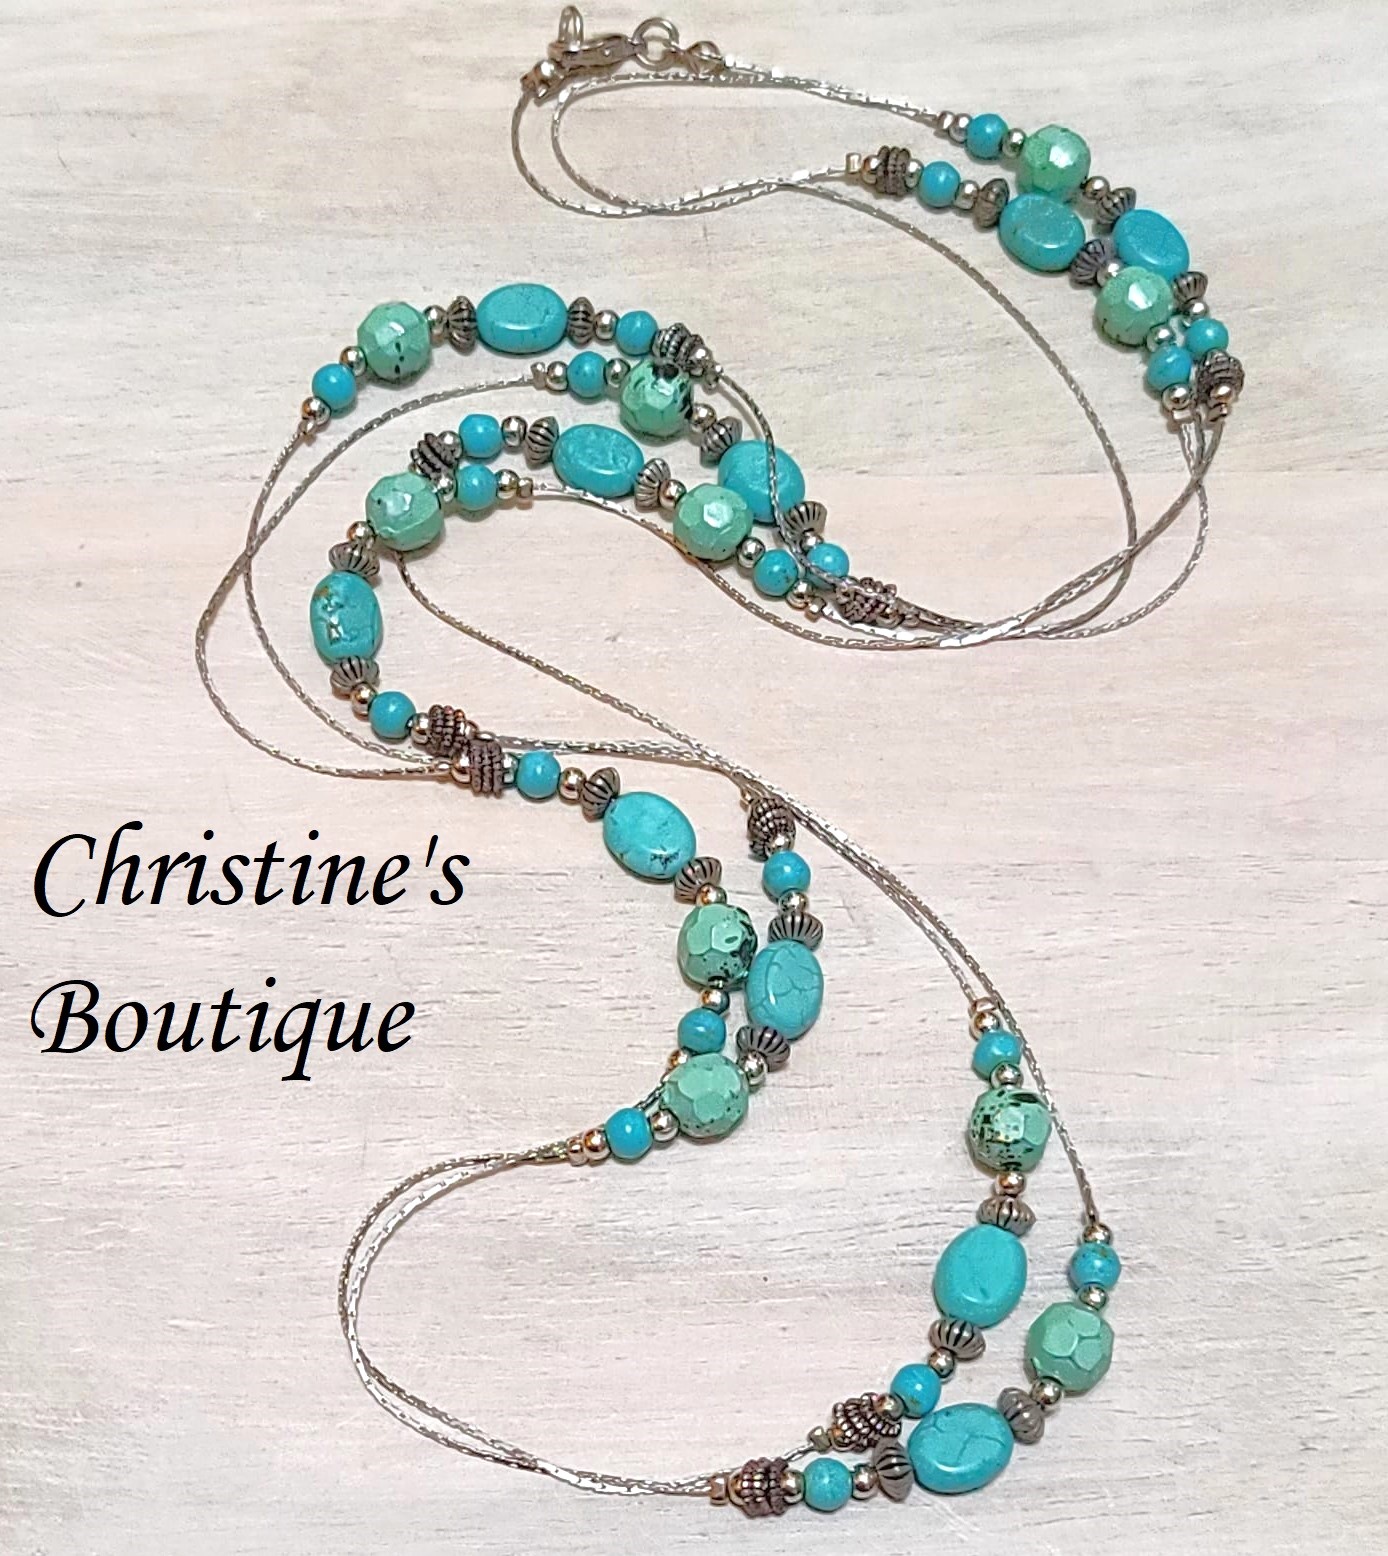 Howilite and turquoise necklace, fashion 60" gemstone long necklace